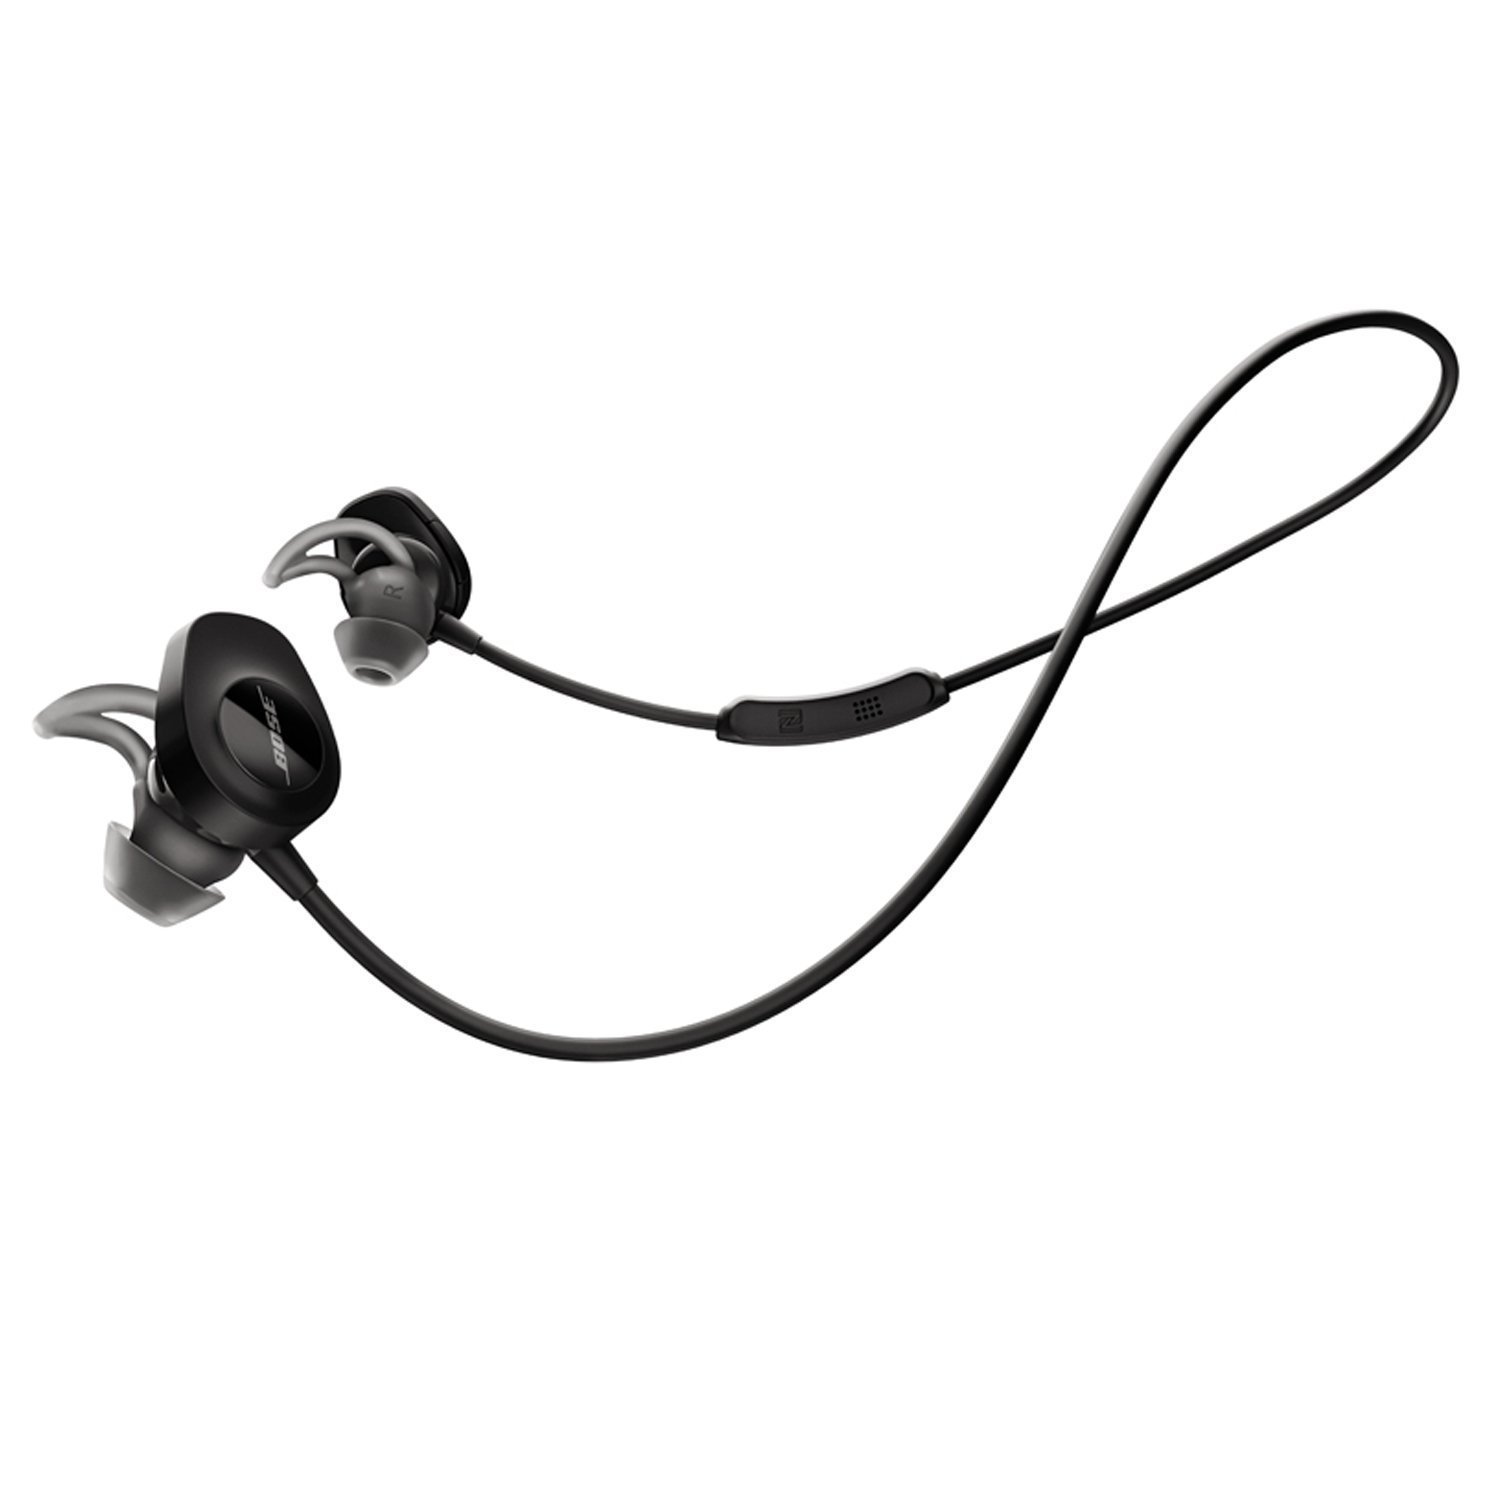 Refurbished Bose SoundSport wireless headphones for $64